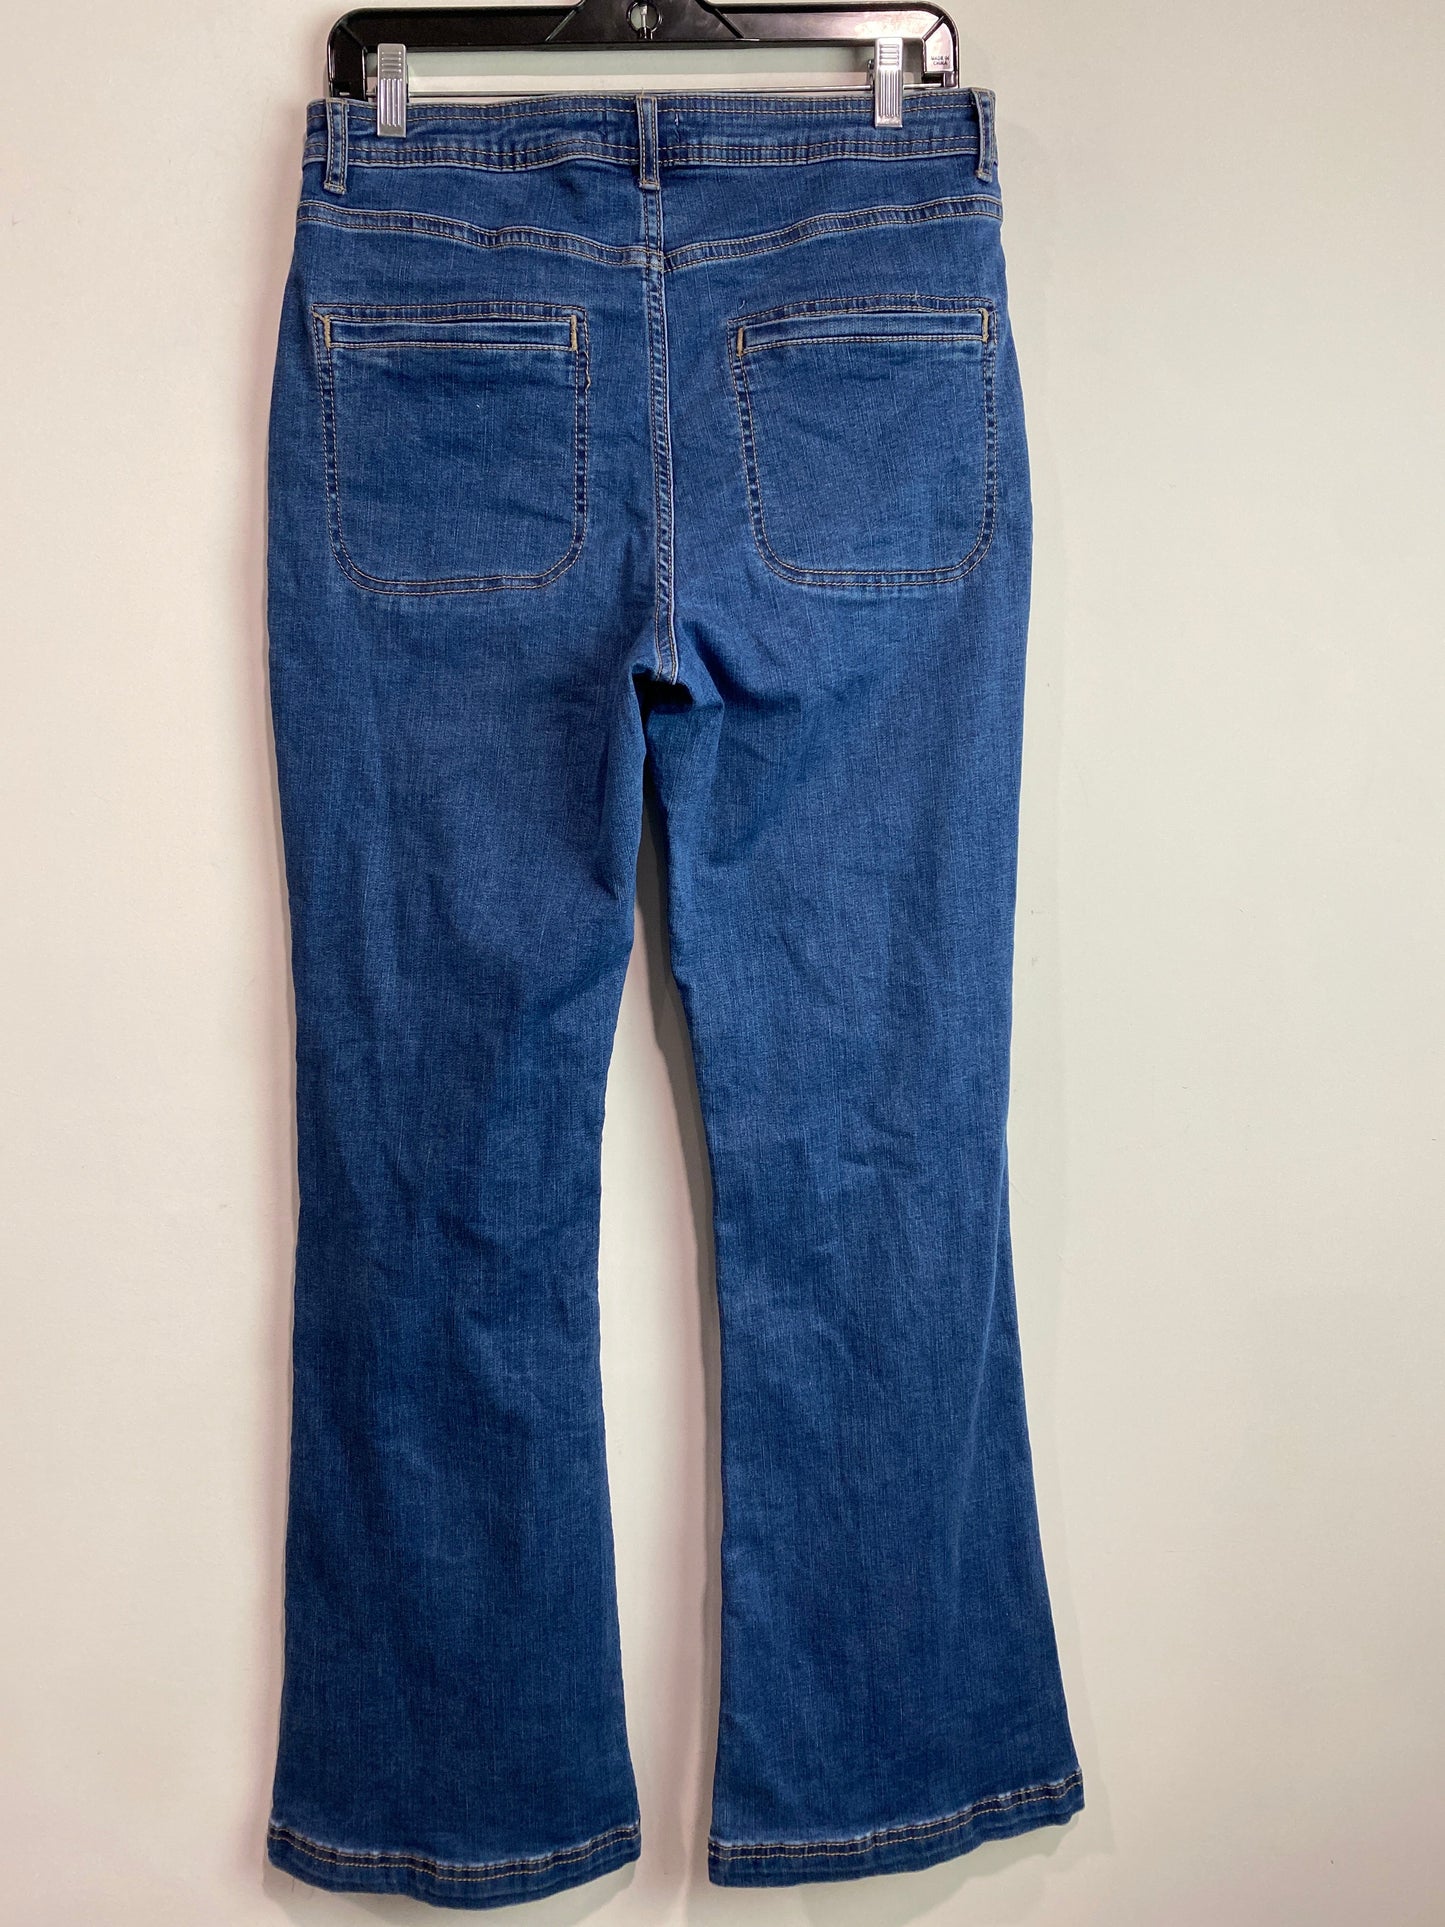 Blue Denim Jeans Boot Cut Knox Rose, Size 10